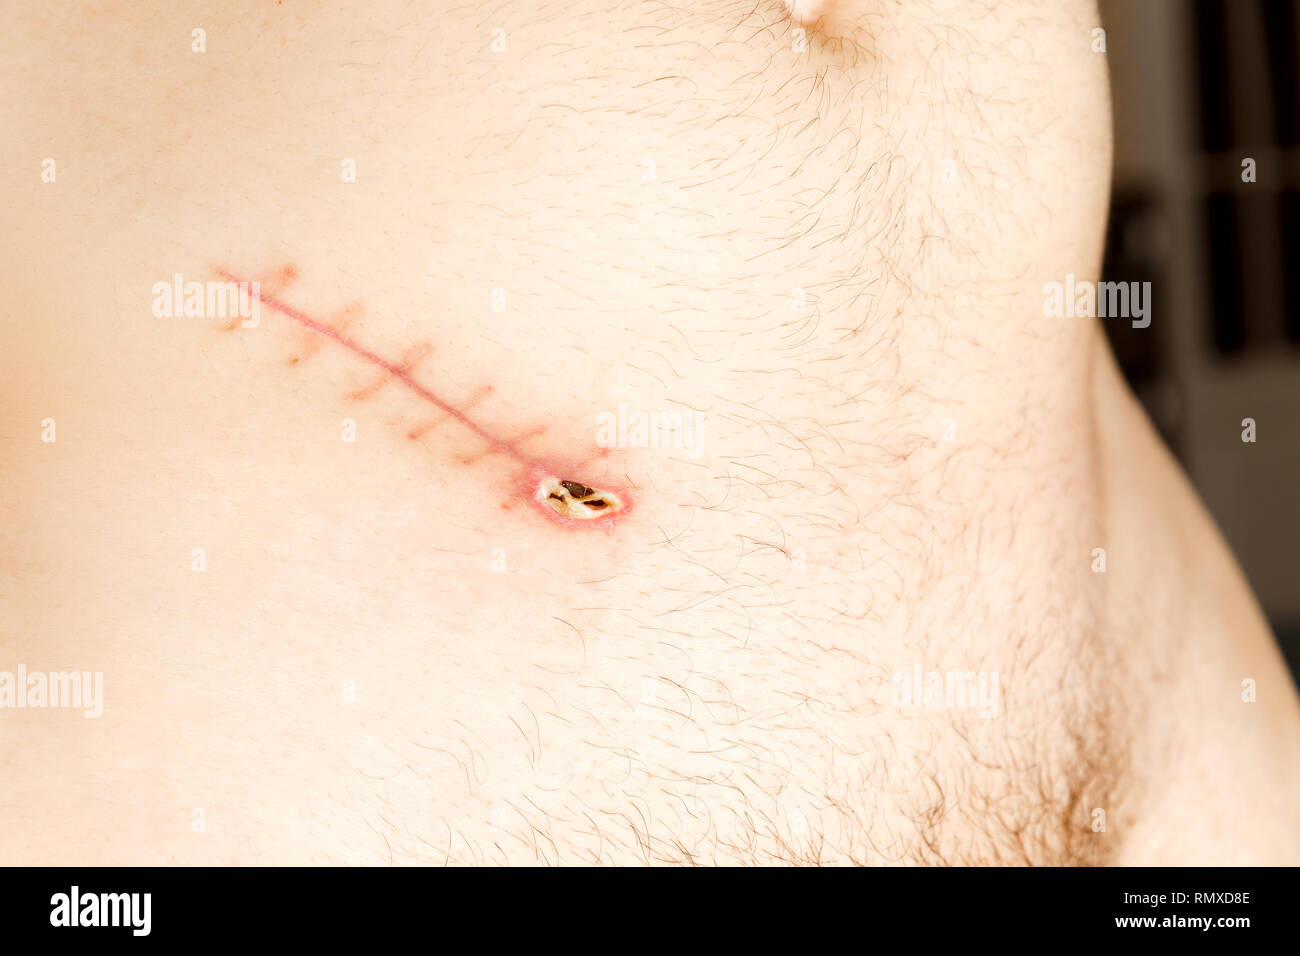 appendicitis scar cover up tattooTikTok Search